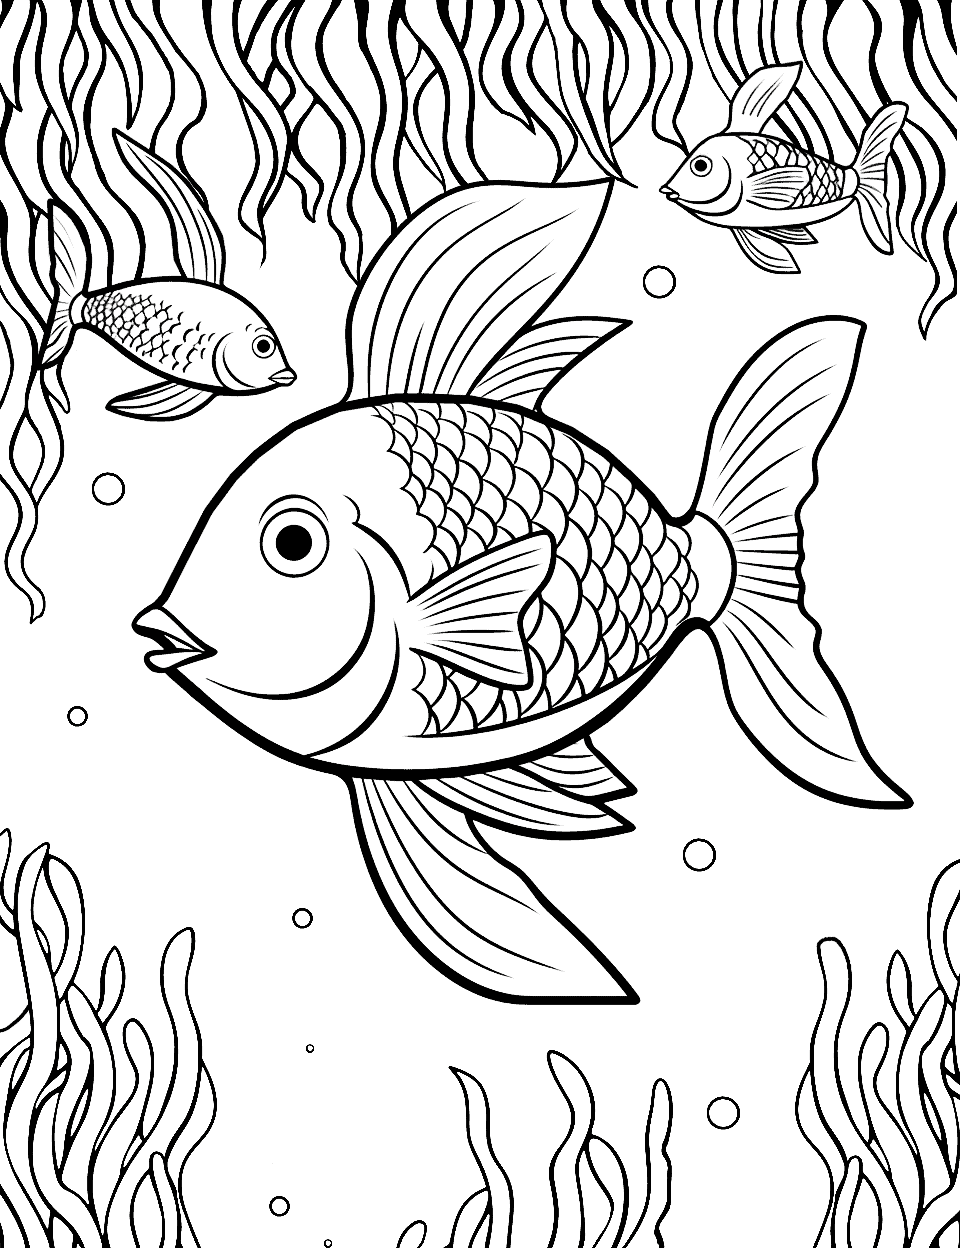 Hawaiian Fish Party Coloring Page - Fish native to Hawaii, having a party amidst the underwater Hawaiian flora.